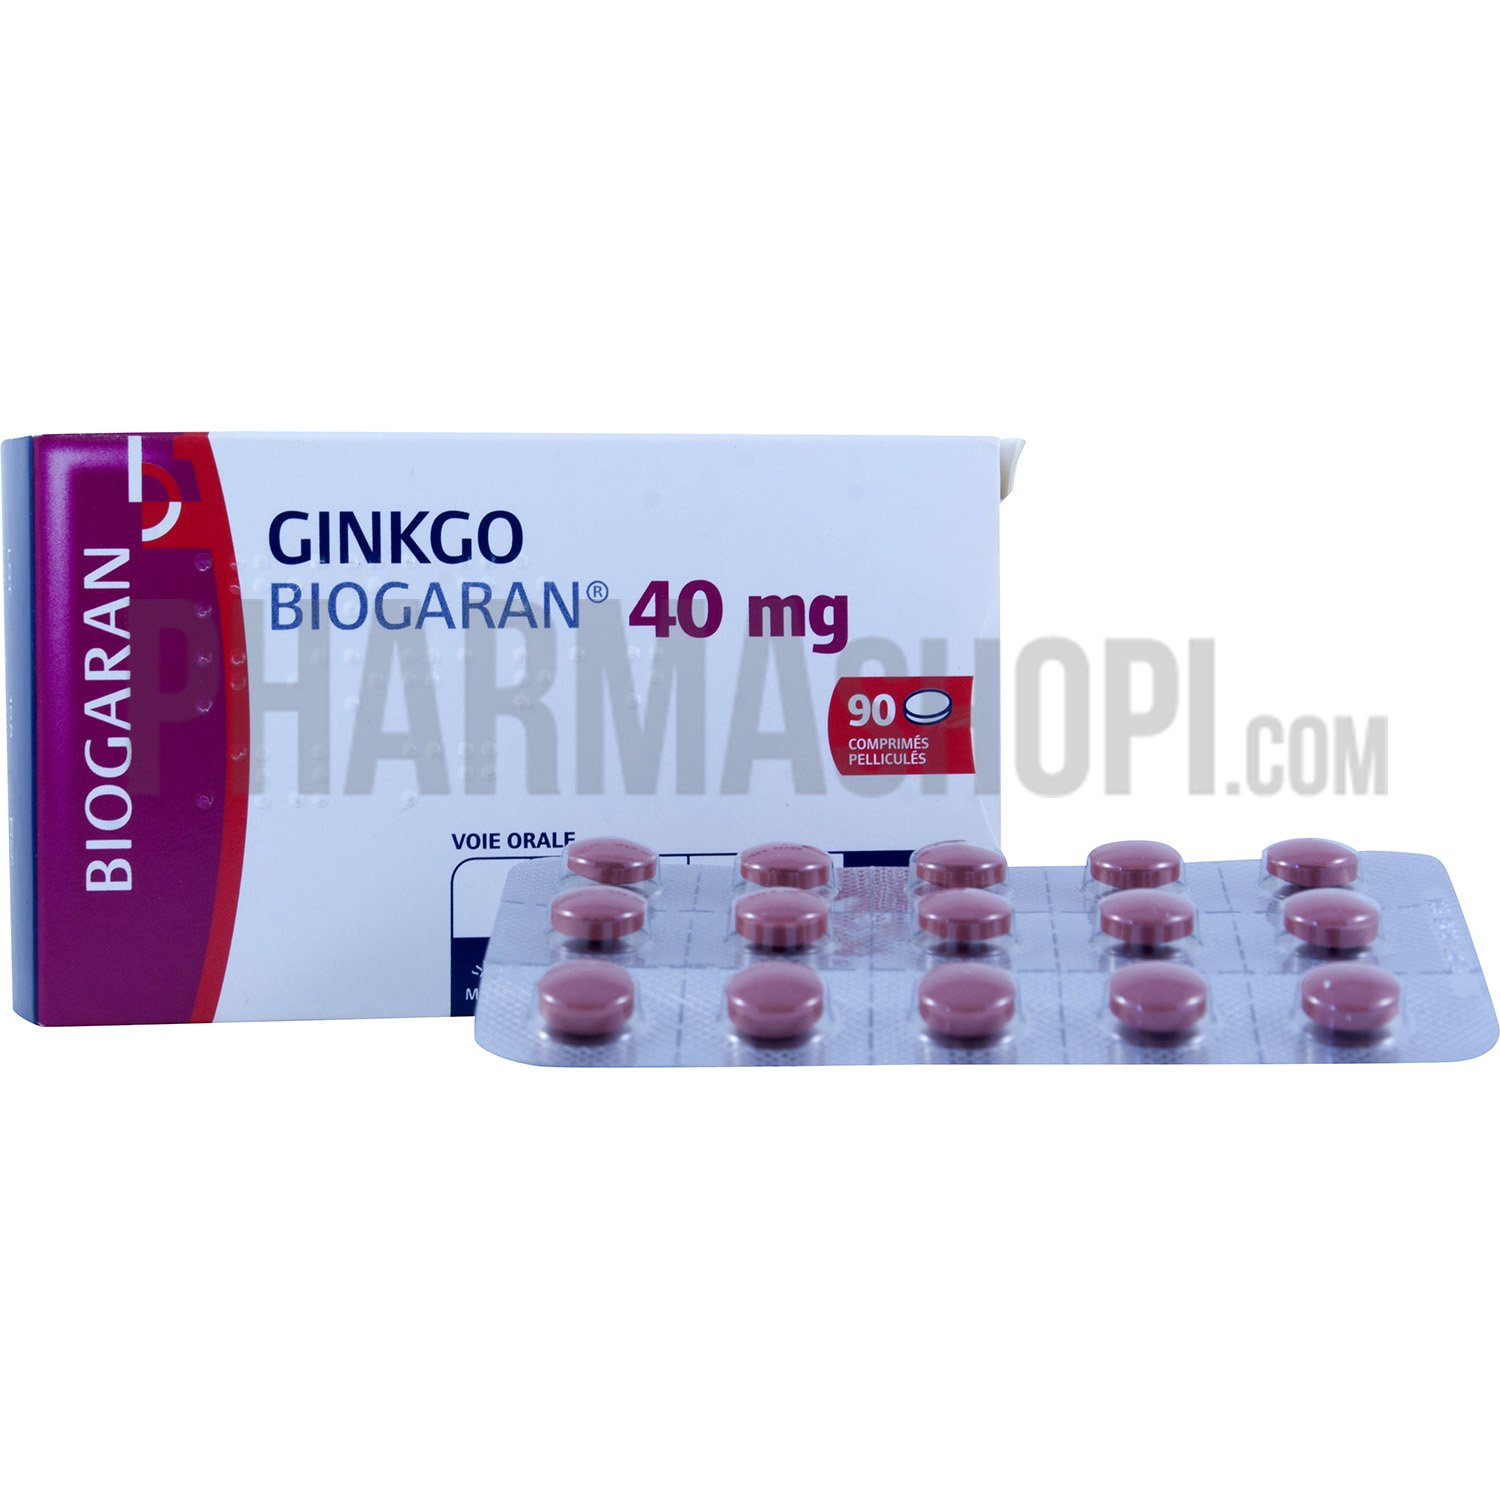 Ginkgo Biogaran 40mg comprimé pelliculé - boite de 90 comprimés